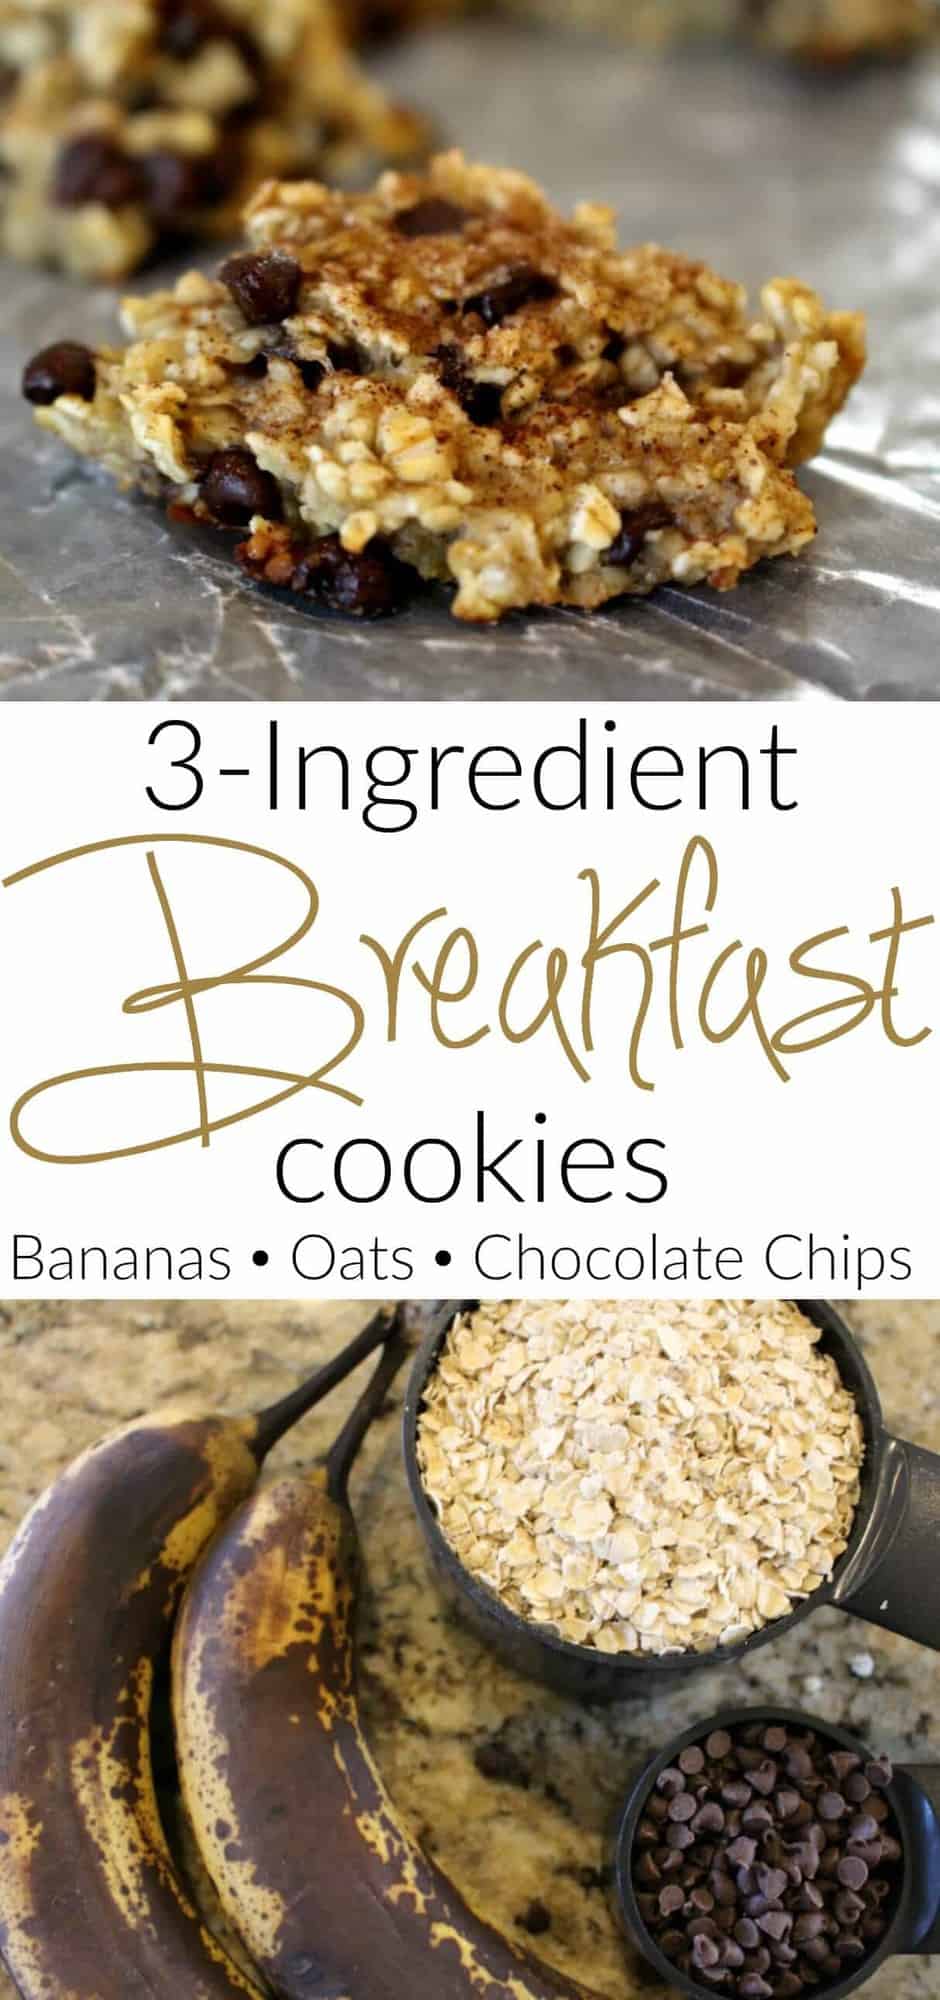 3 ingredient breakfast cookies - bananas, oats and chocolate chips